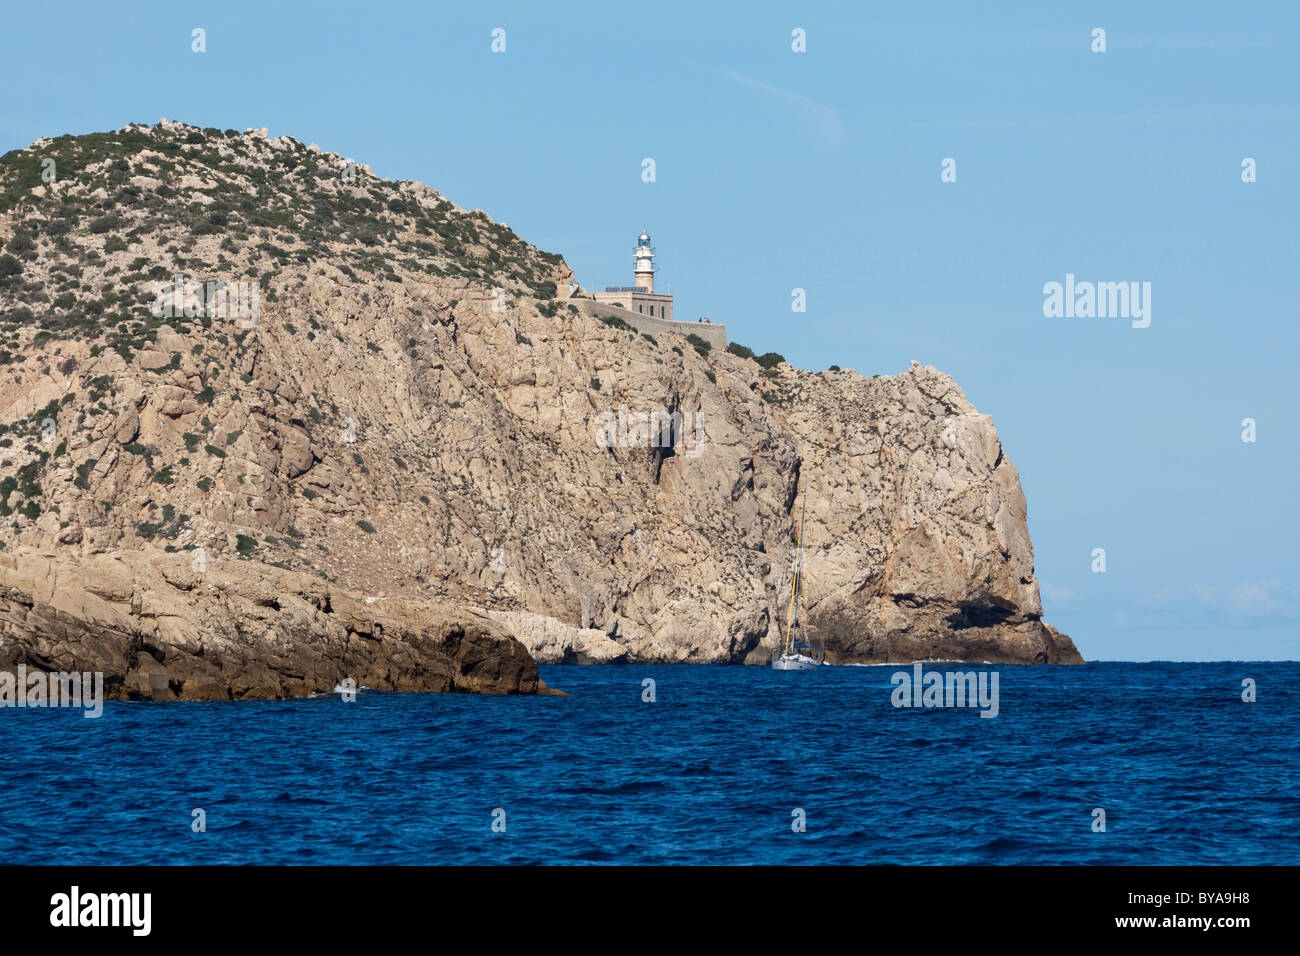 Lighthouse at Cap de Tramuntana on Dragon Island, Isla Dragonera, seen from the sea, Majorca, Balearic Islands, Spain, Europe Stock Photo